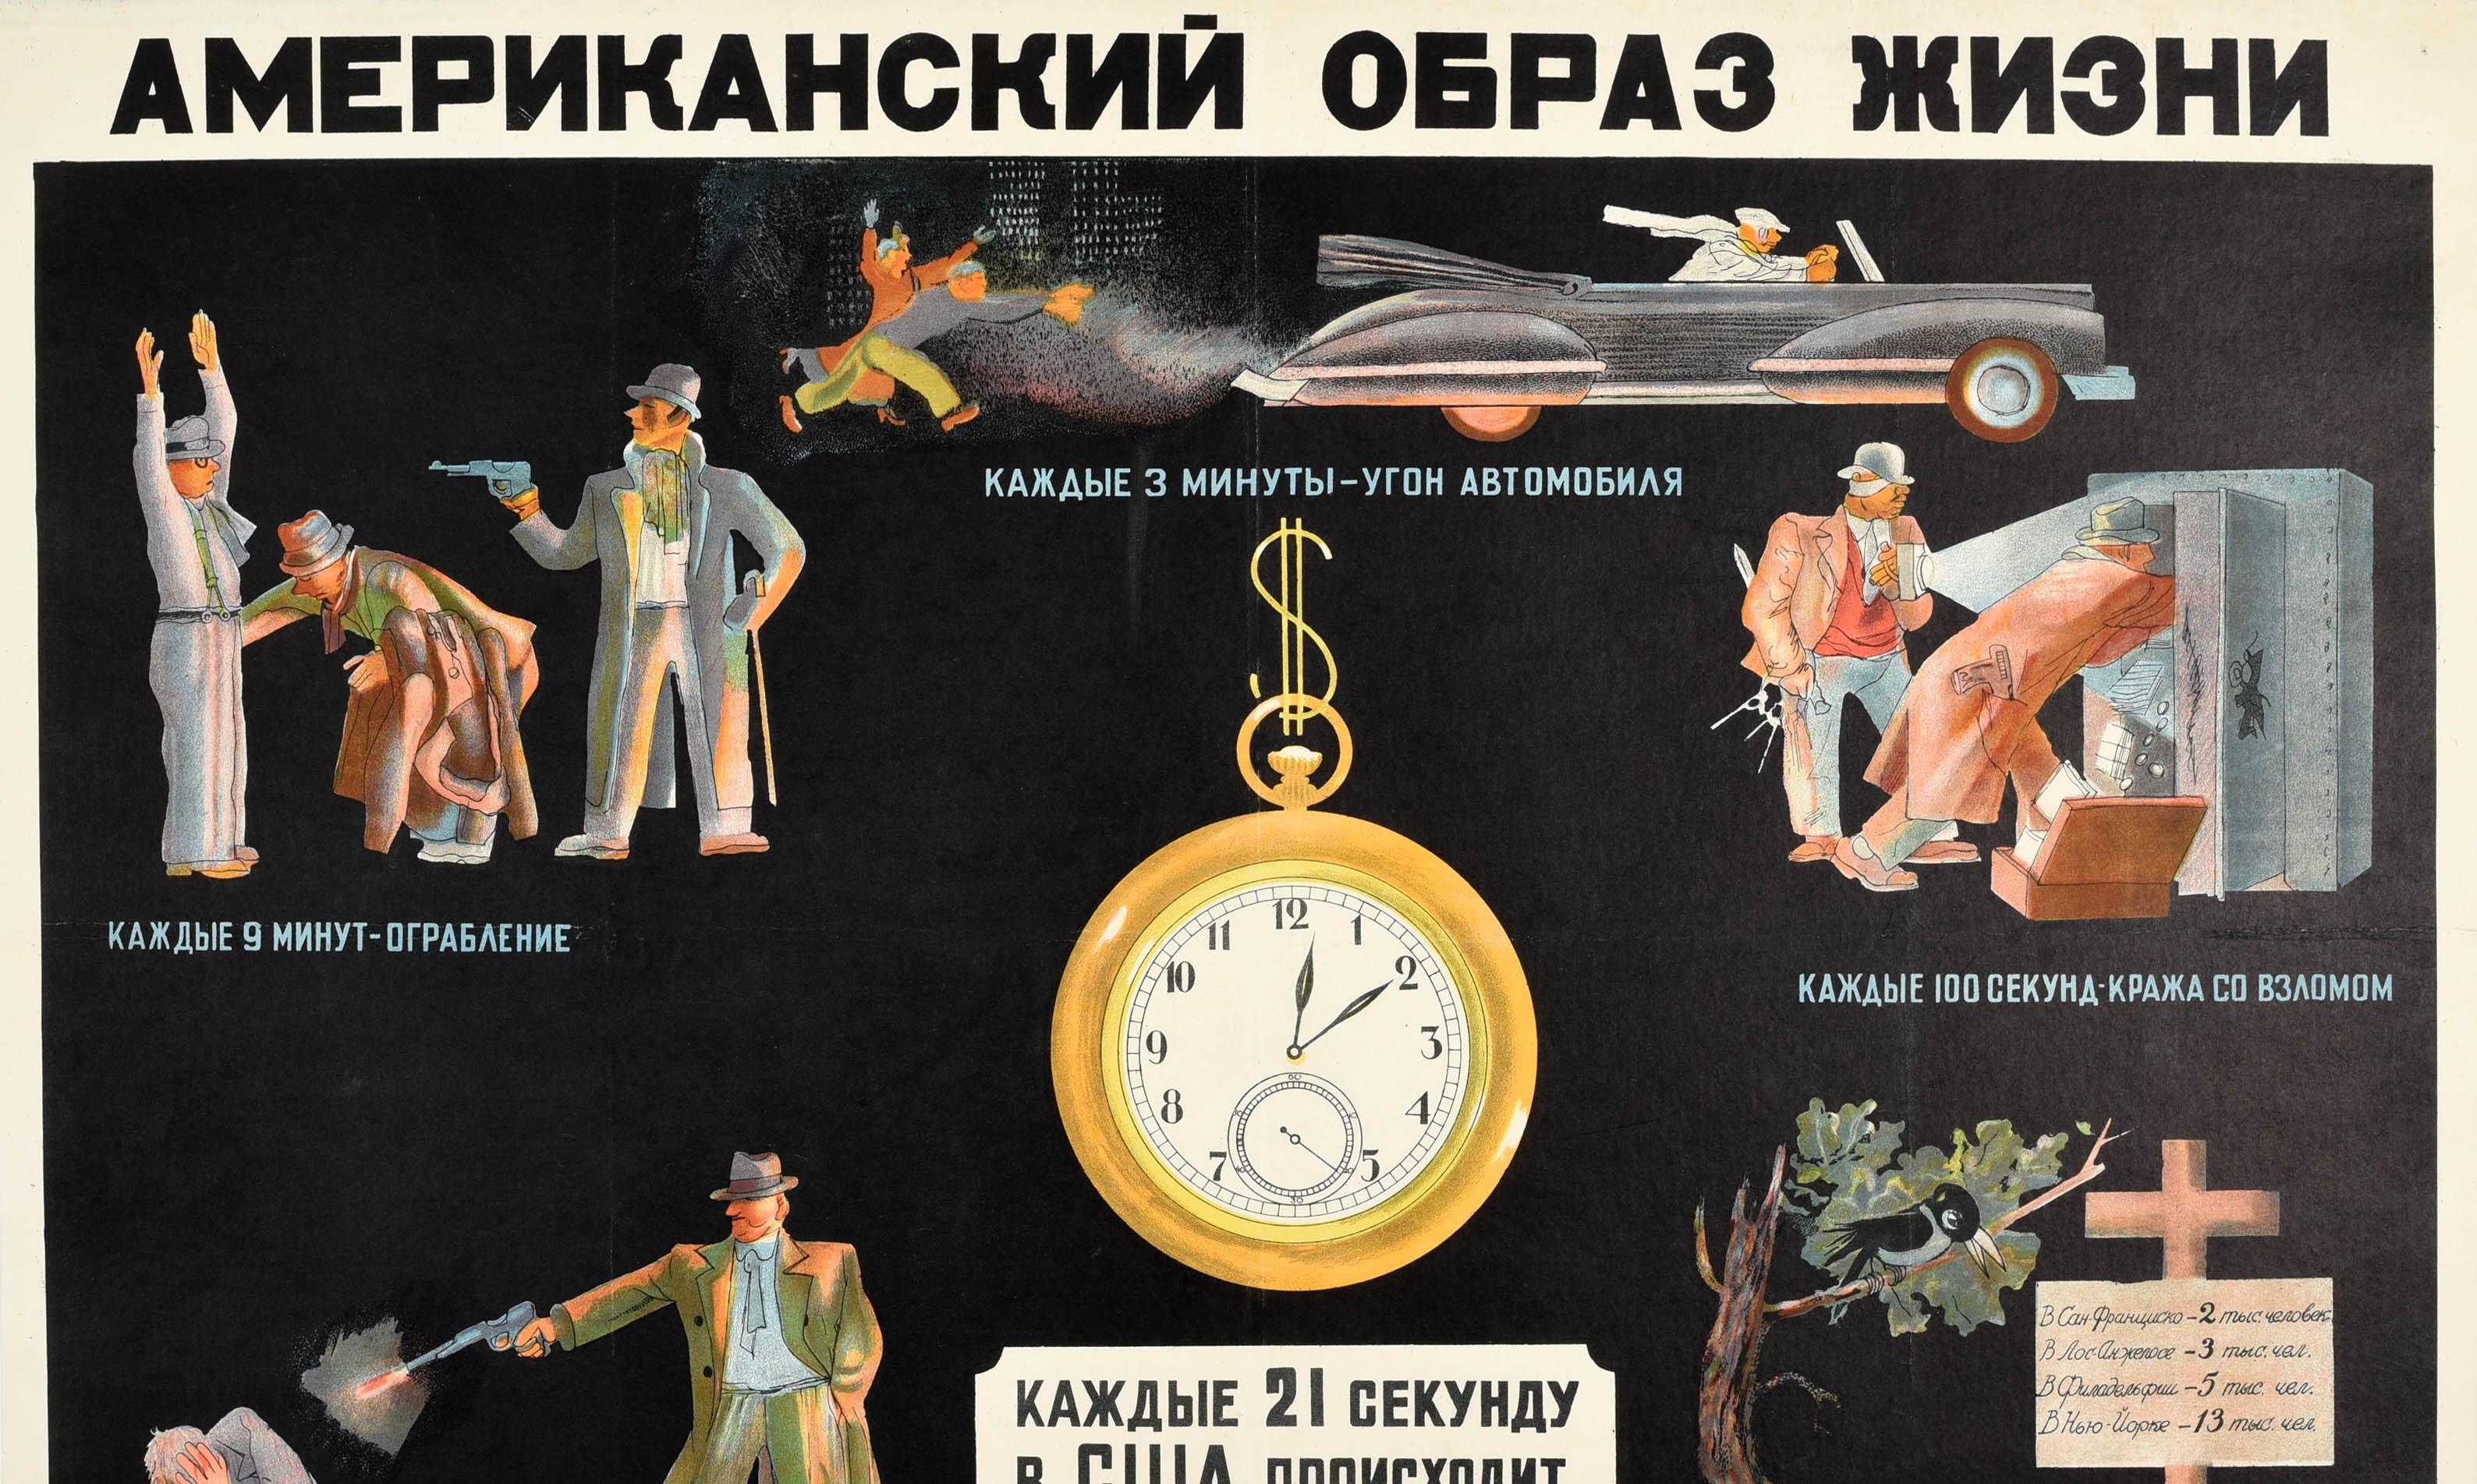 Original Vintage USSR Poster American Lifestyle Crime Anti-USA Soviet Propaganda - Print by Cheremnykh